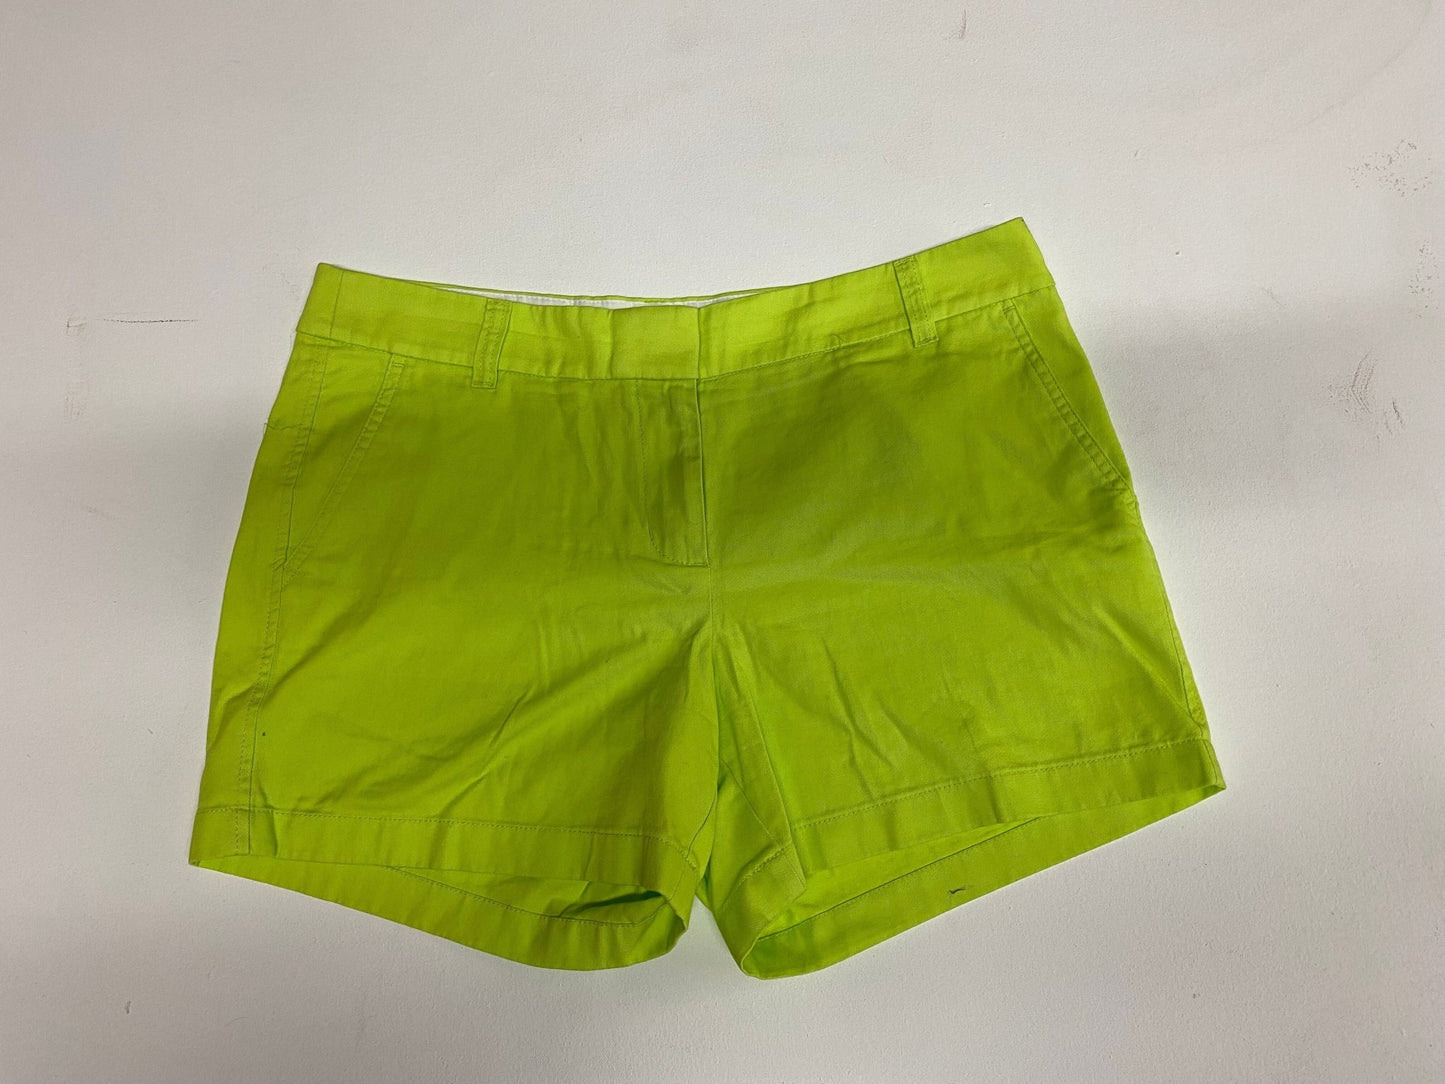 "J. Crew" Bright Green Shorts Size 30